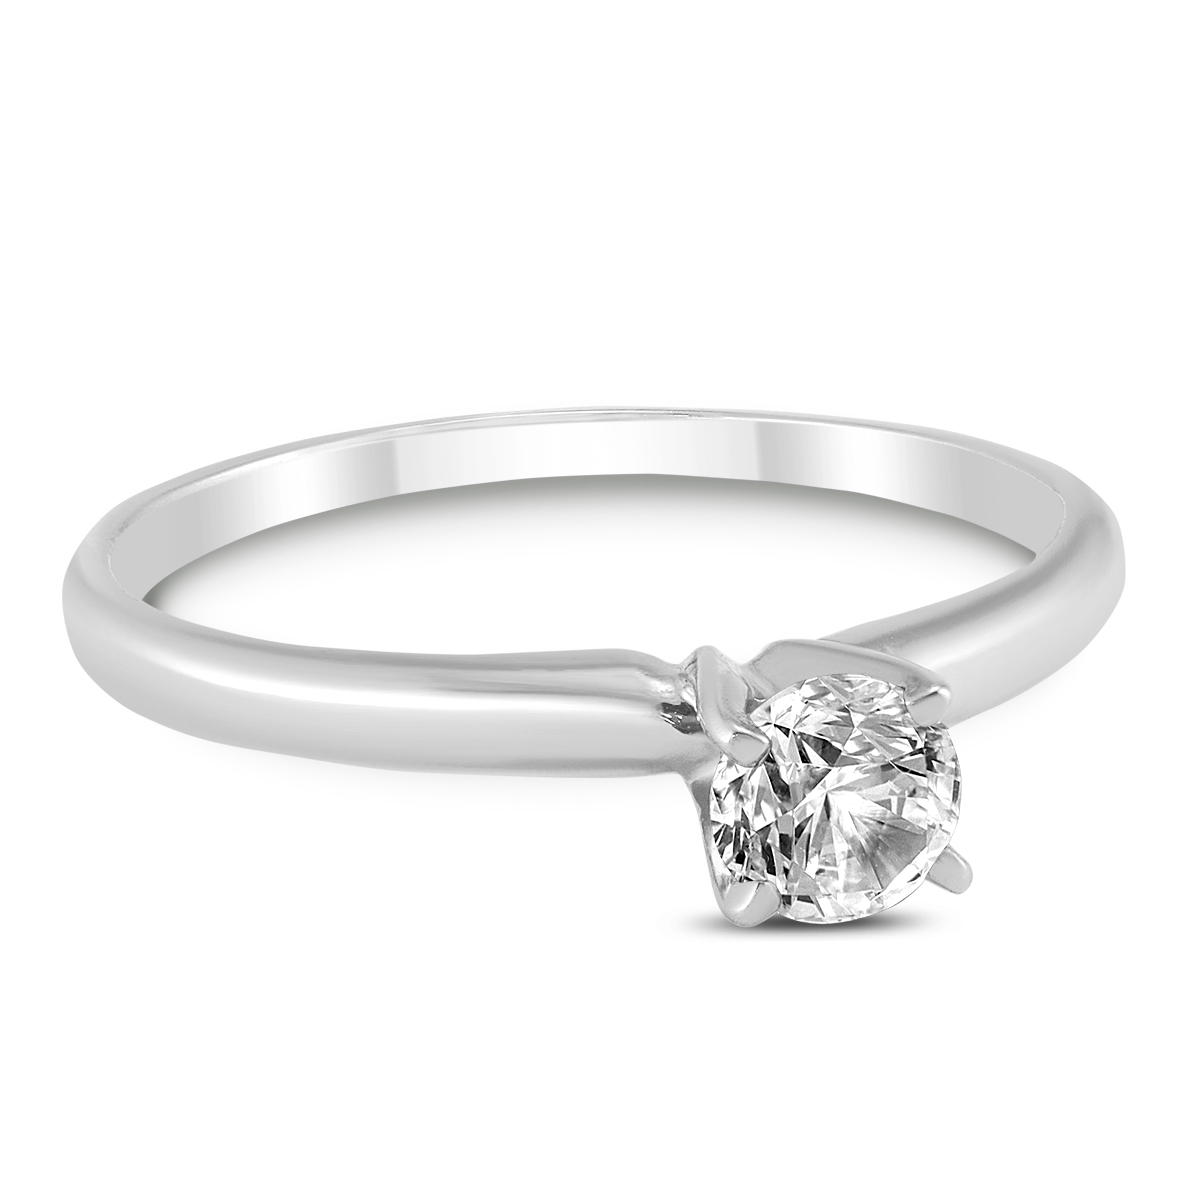 szul.com 1/3 Carat Round Diamond Solitaire Ring in 14K White Gold